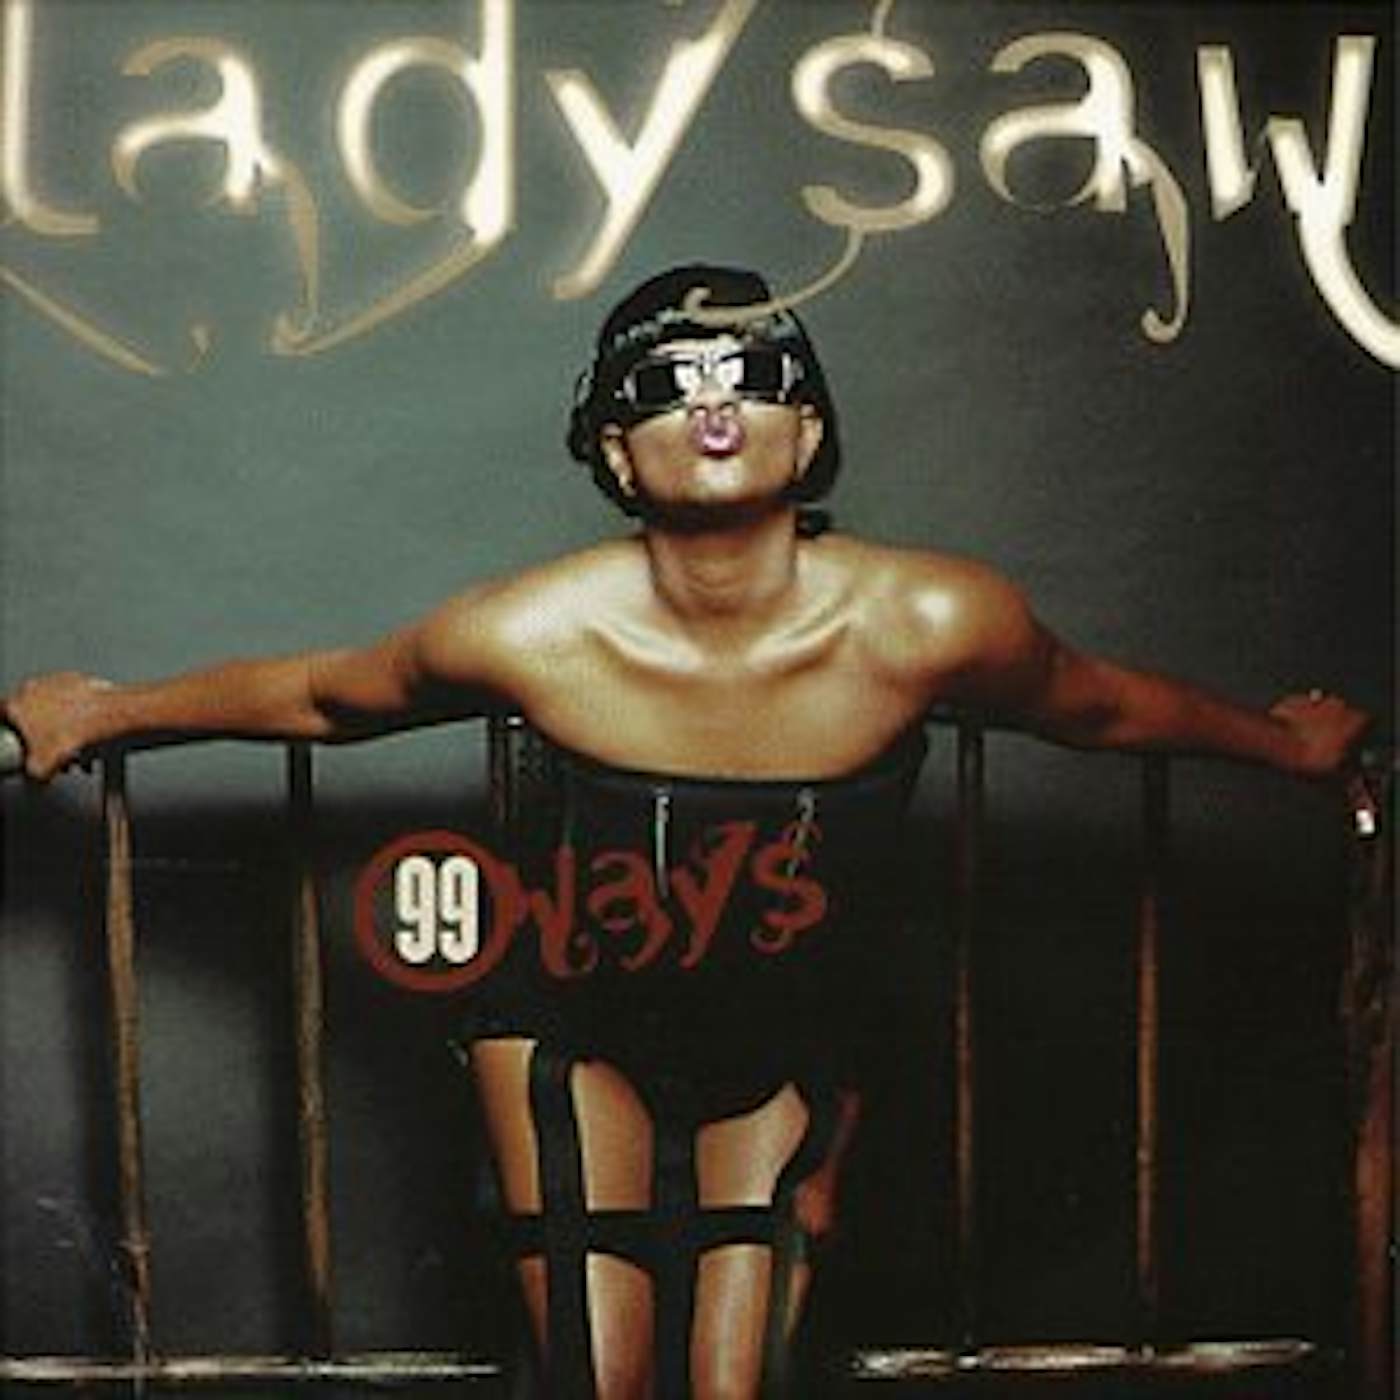 Lady Saw 99 Ways Vinyl Record